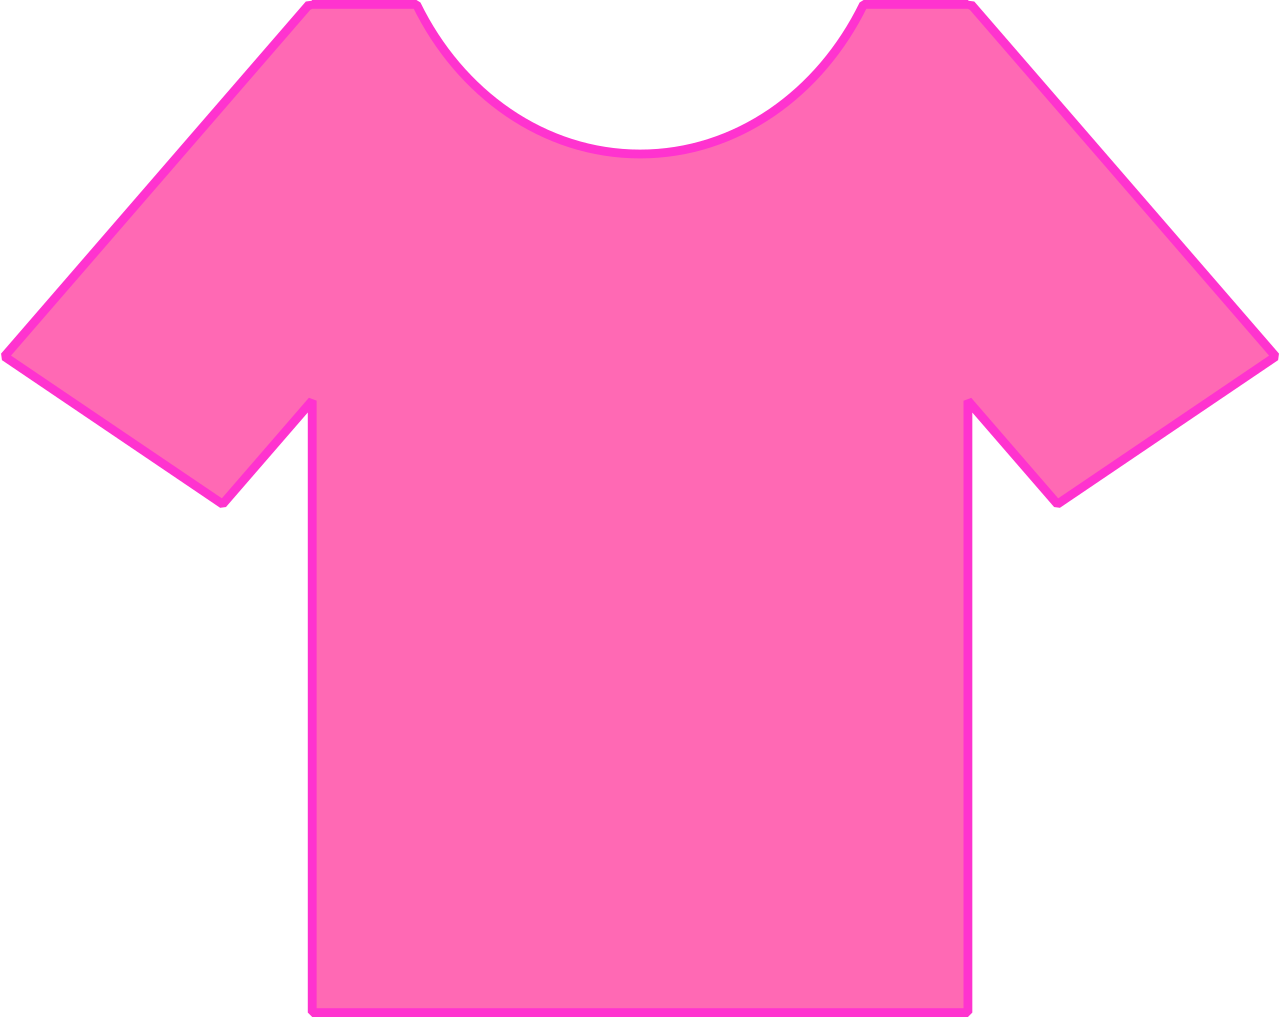 Download File:T-shirt (HotPink).svg - Wikipedia